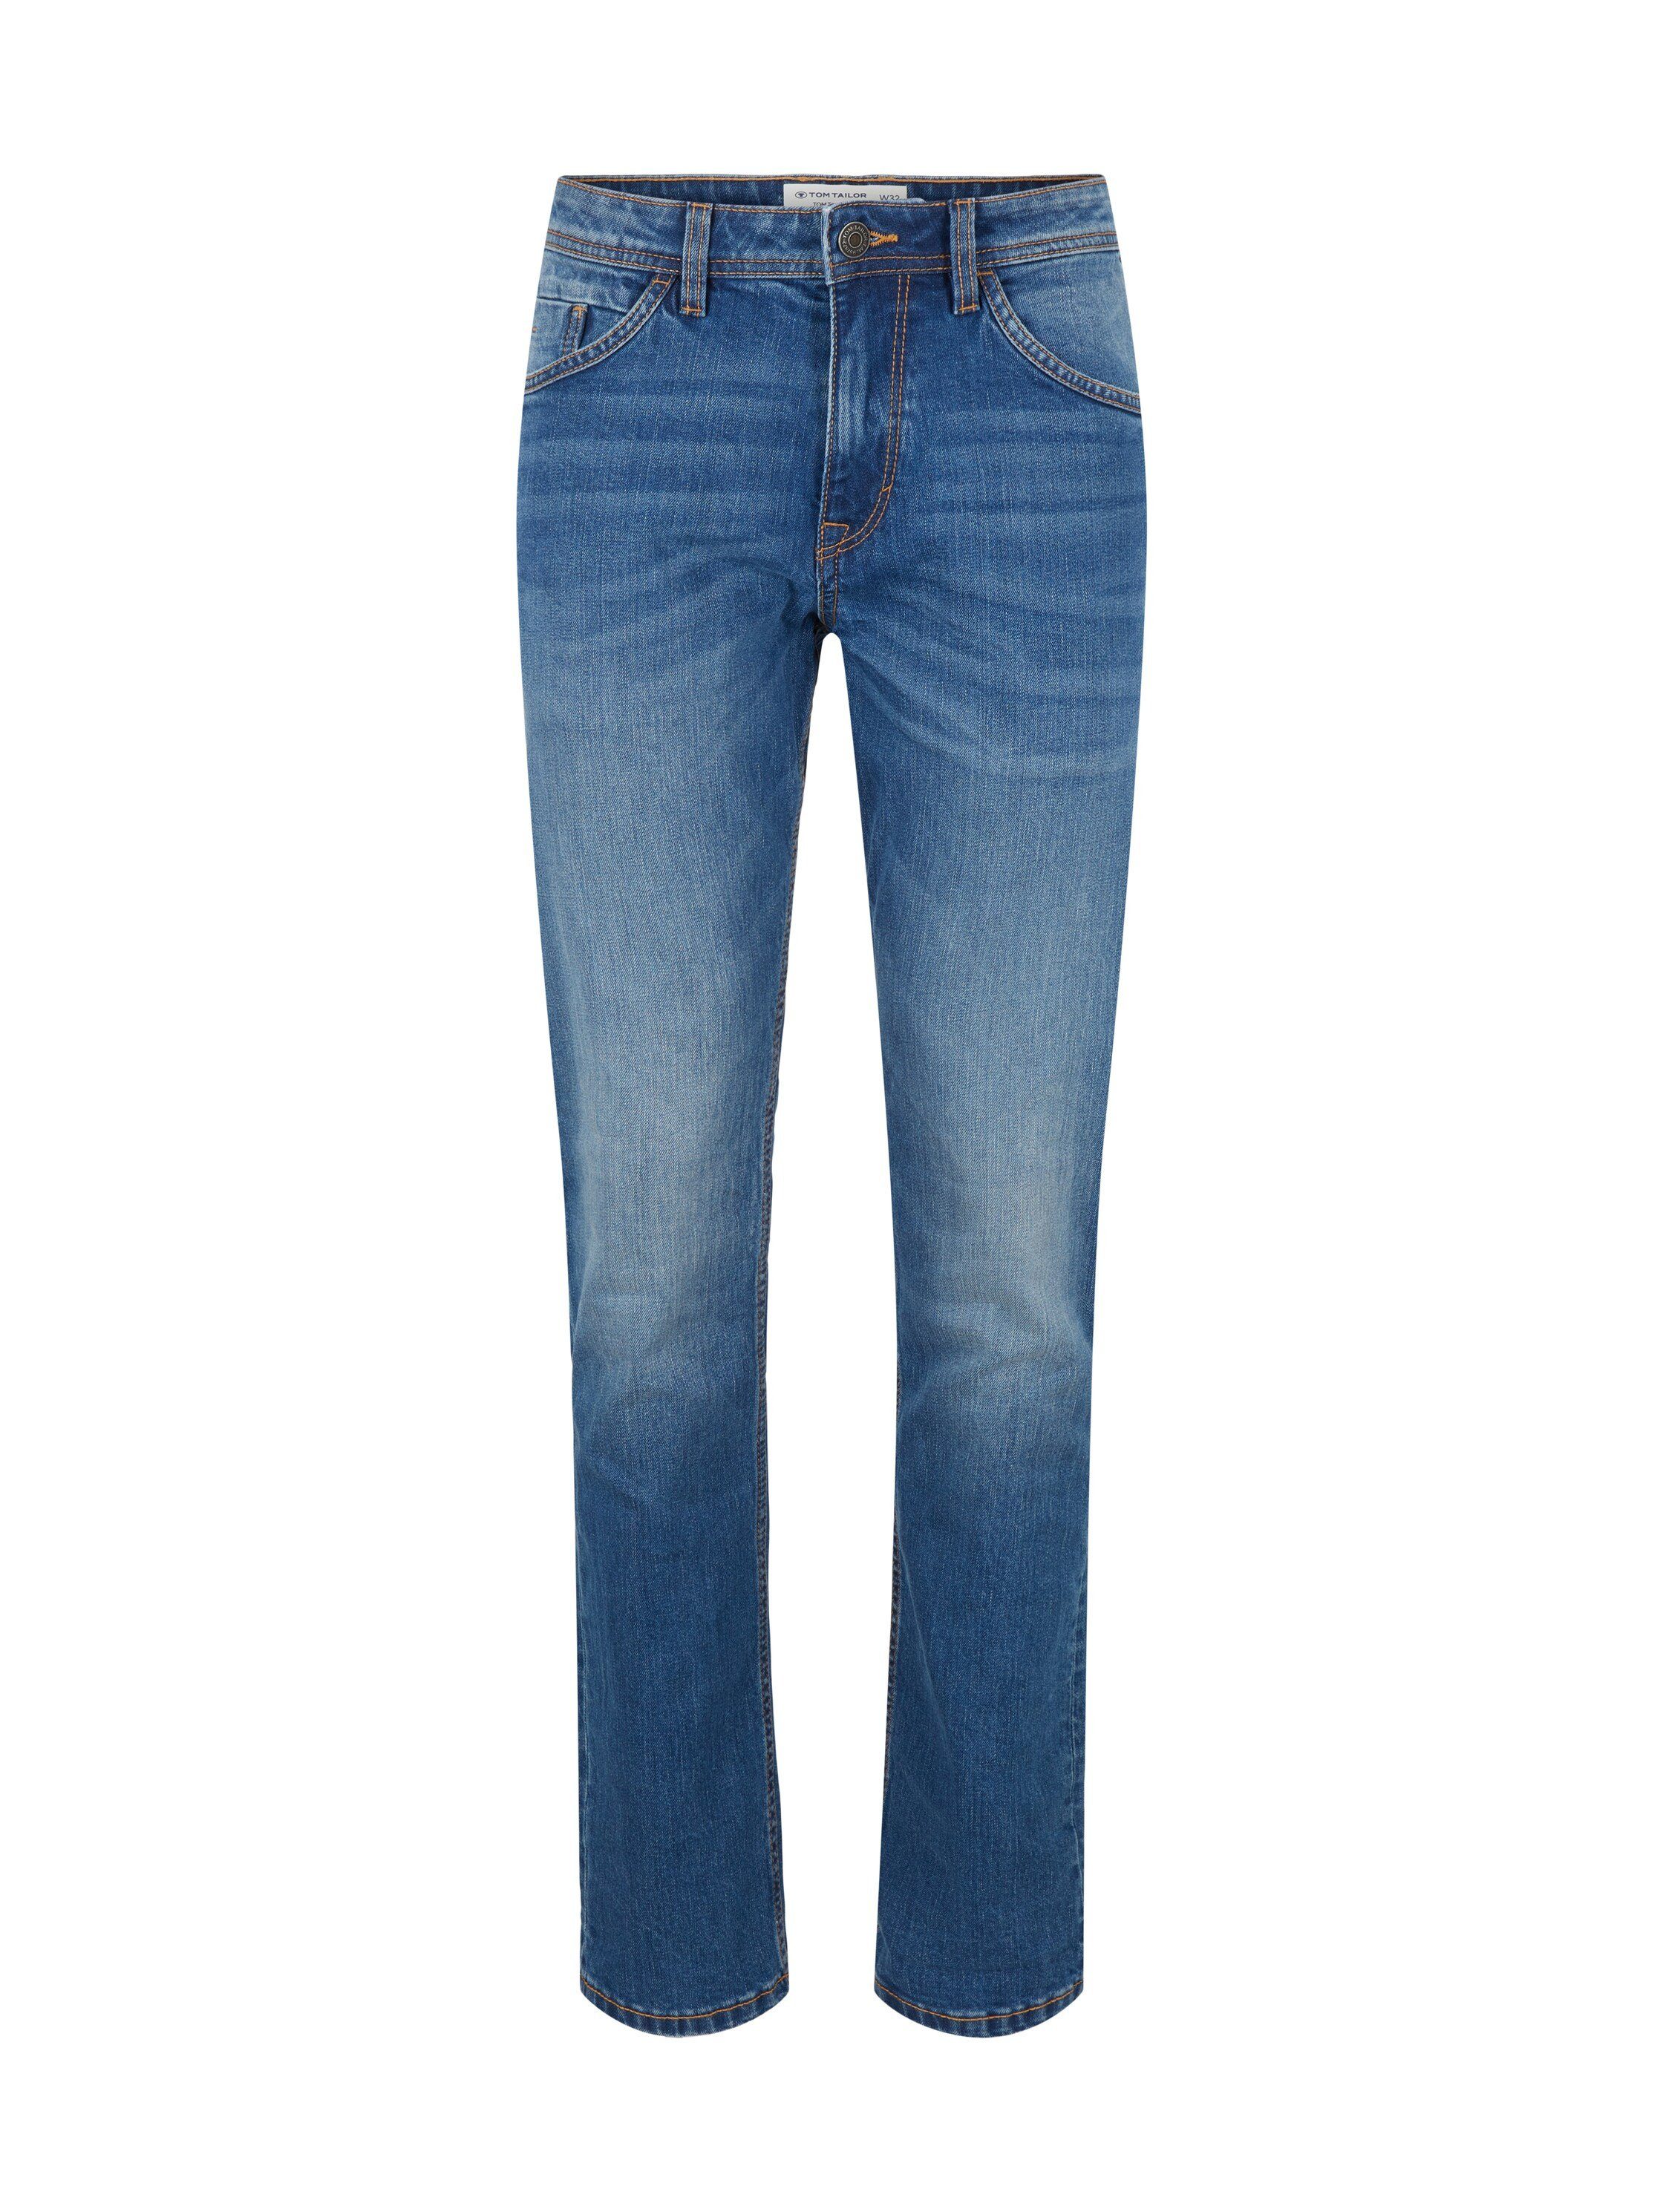 TOM TAILOR Jeans Slim-fit-Jeans used Slim-Fit mid denim blue stone